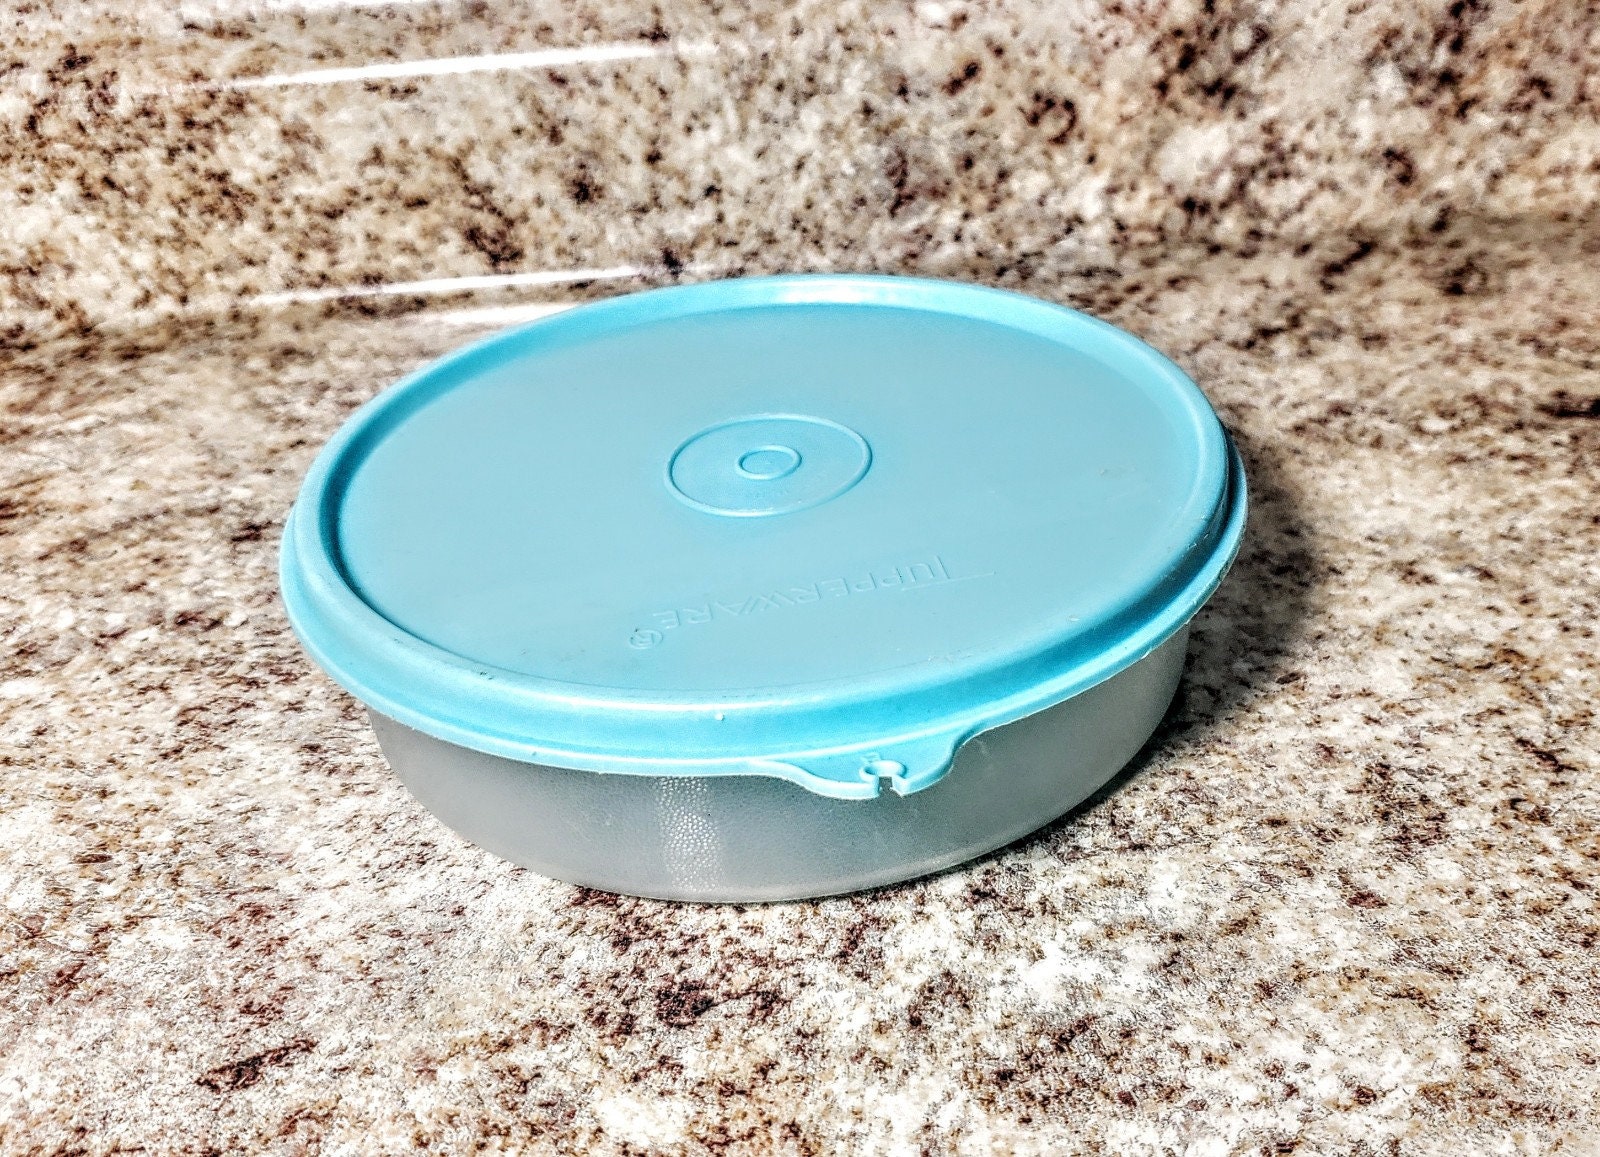 Tupperware Plastic Round Container, for Food Storage